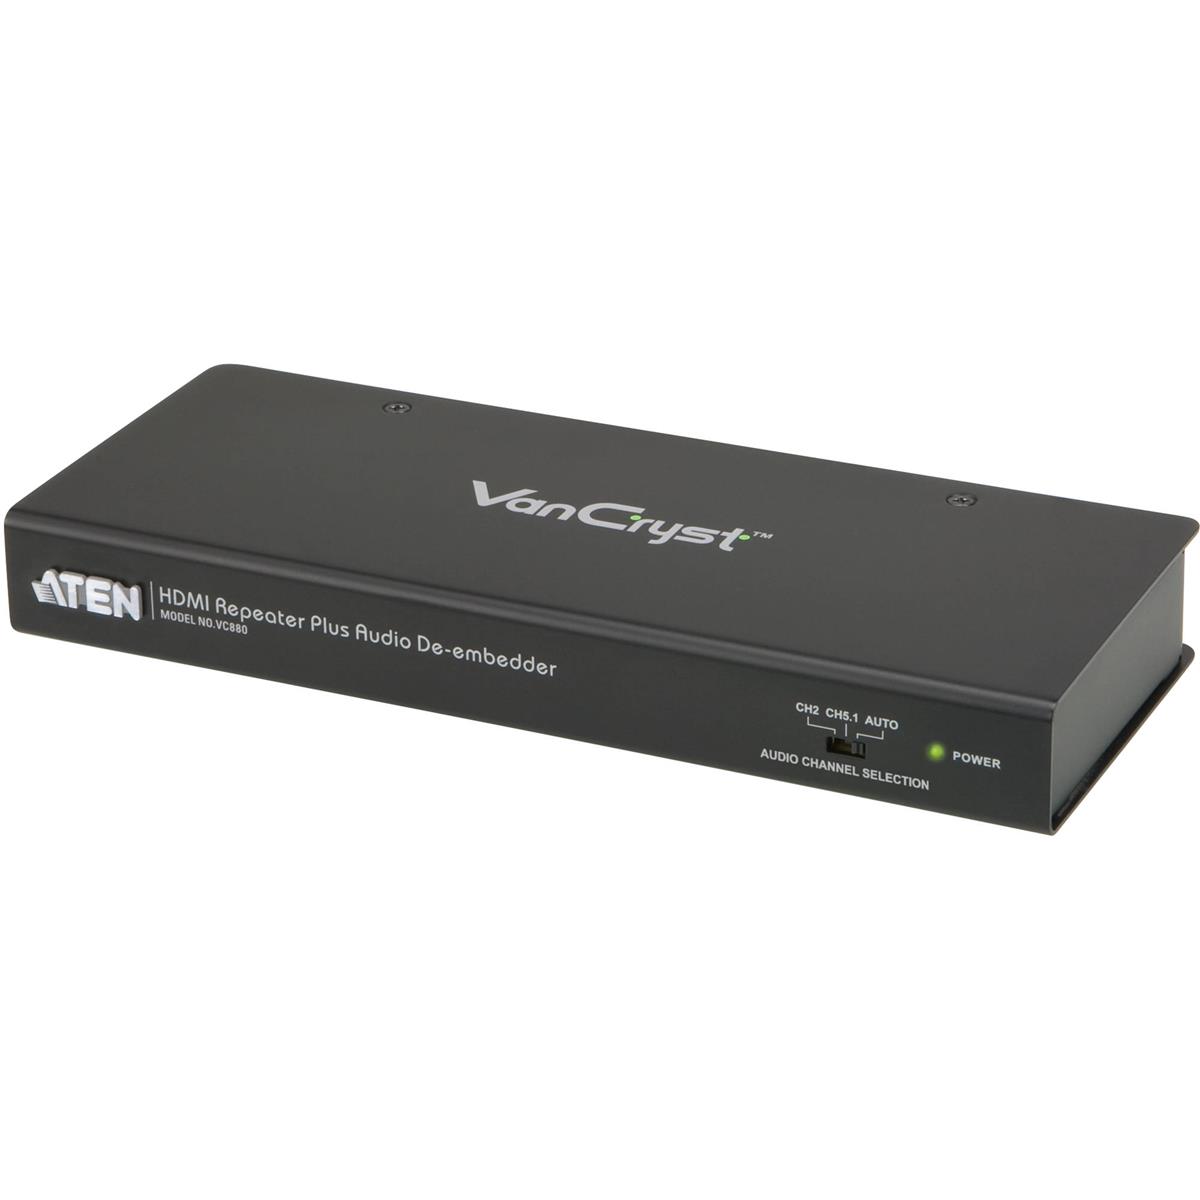 Image of Aten VC880 HDMI Repeater Plus Audio De-embedder